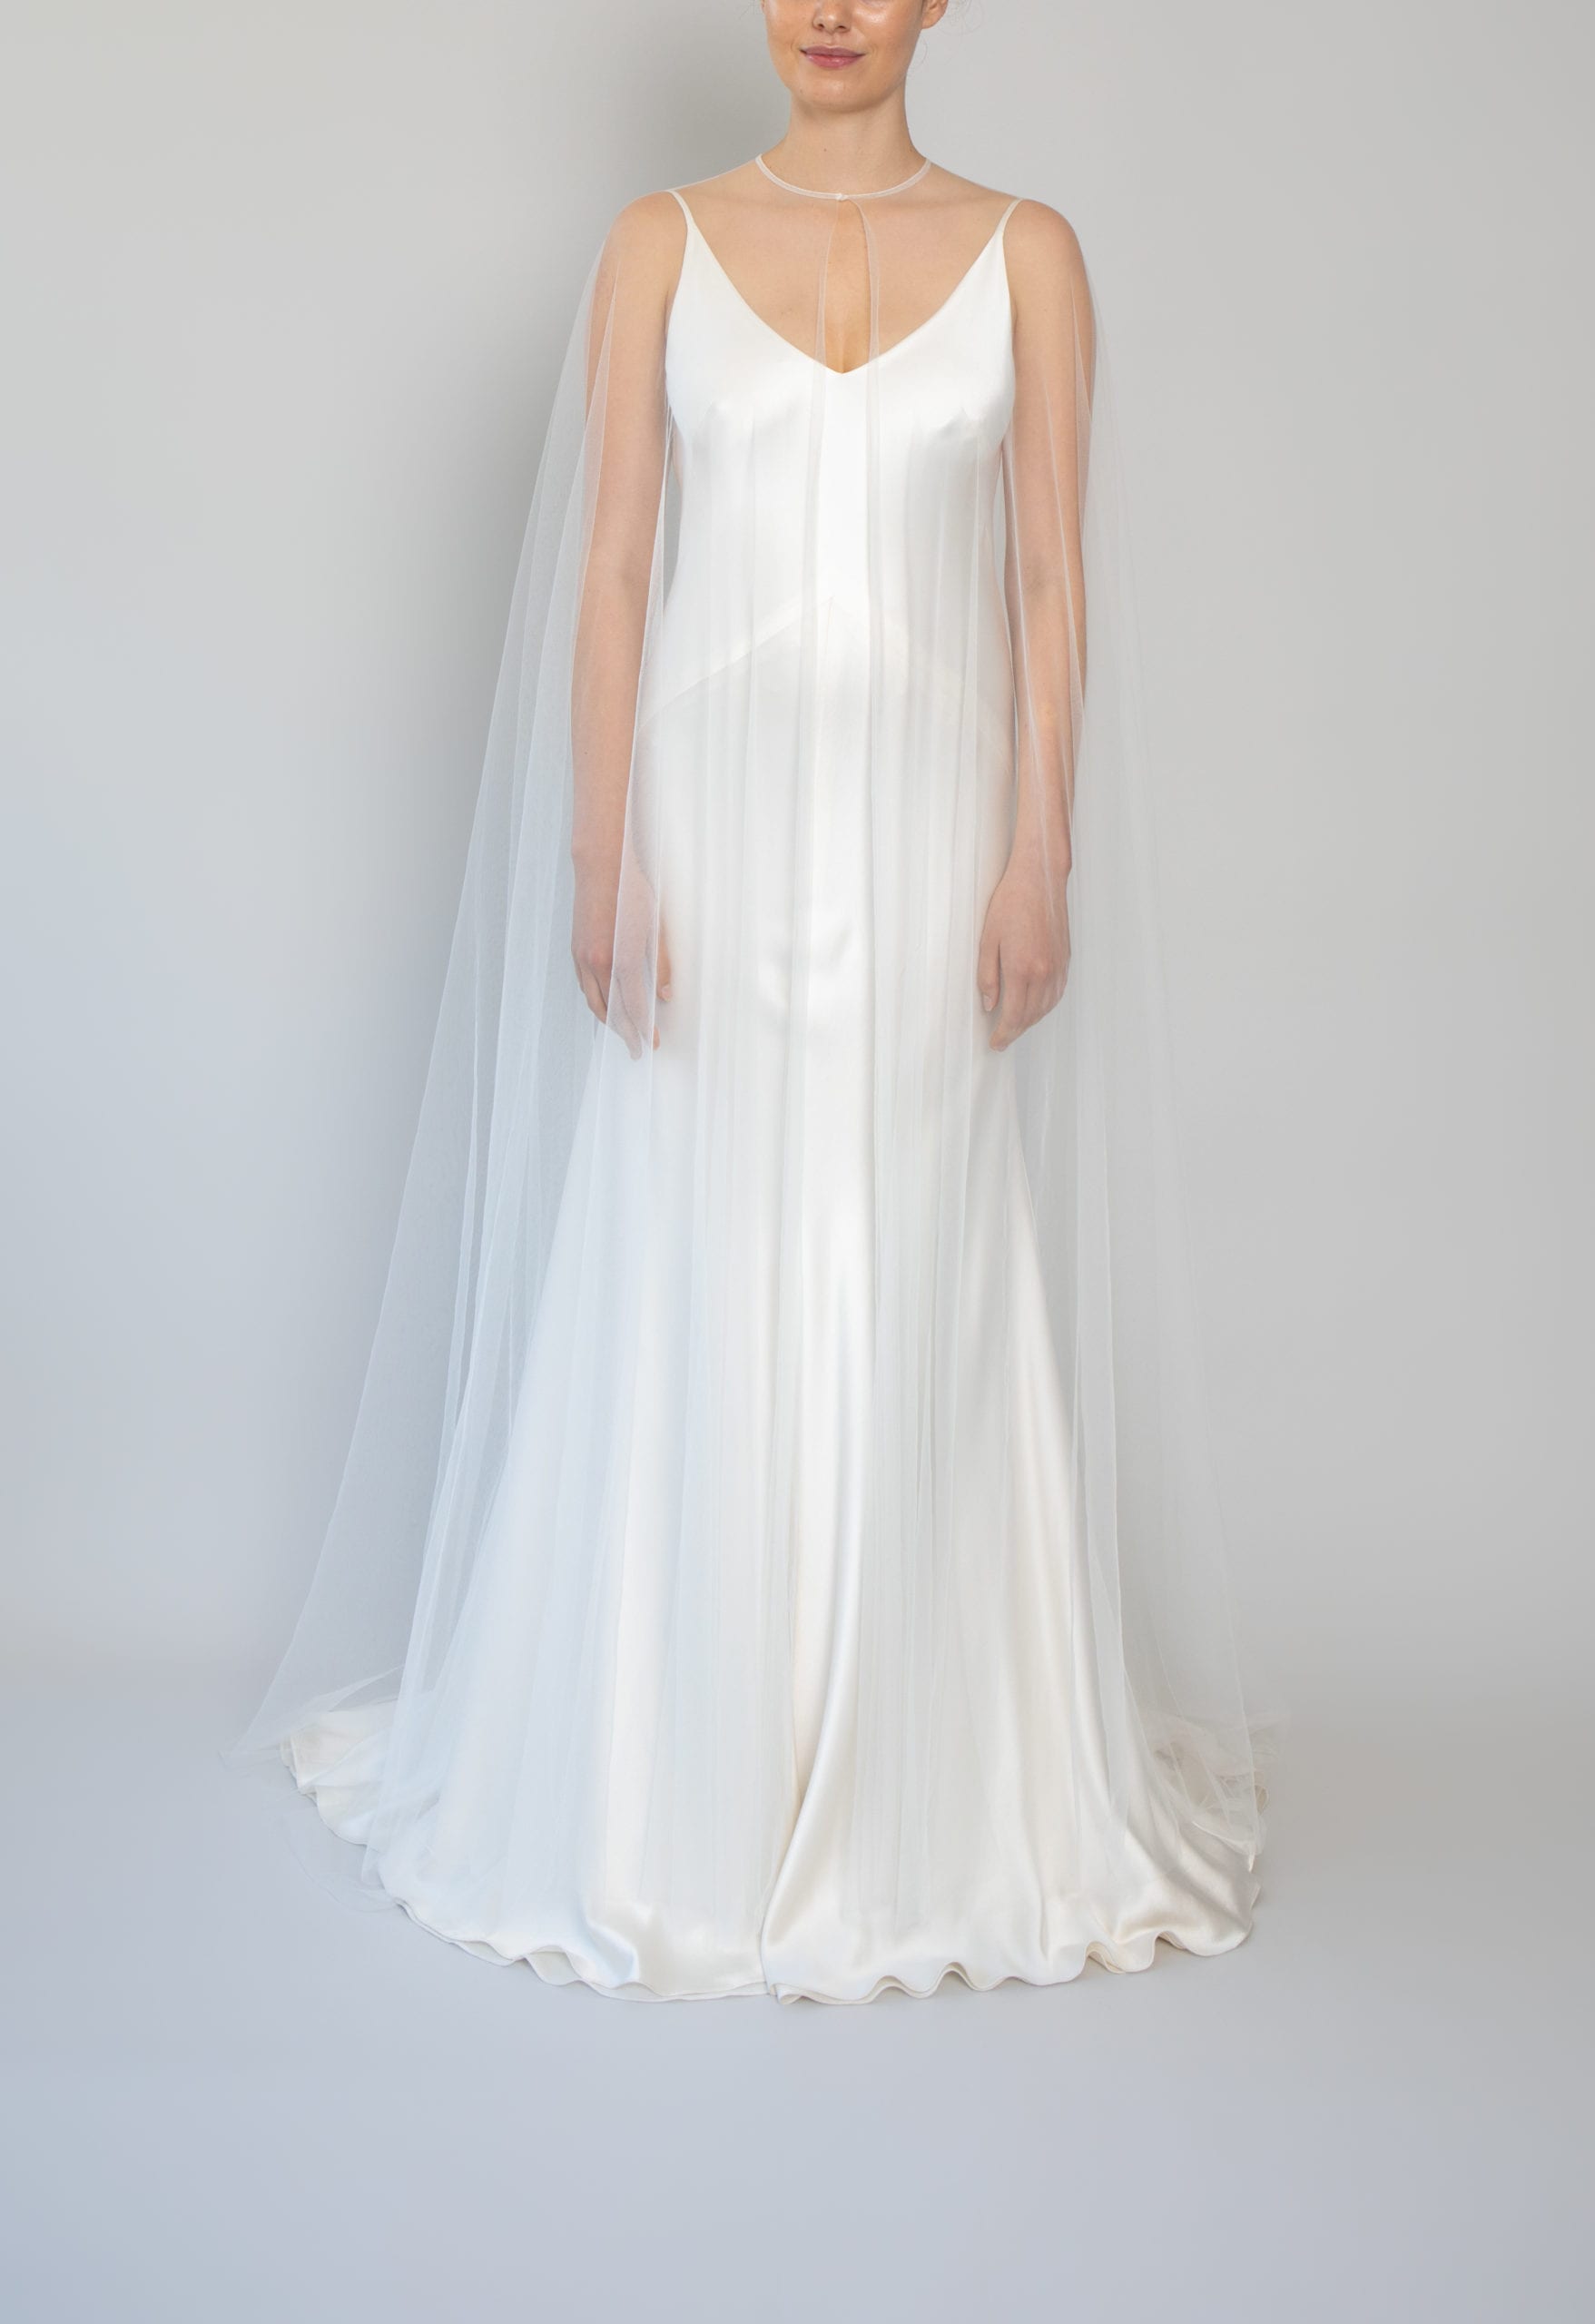 Andrea Hawkes Bridal Bia Cape - Elegant Full Length Tulle Wedding Cape